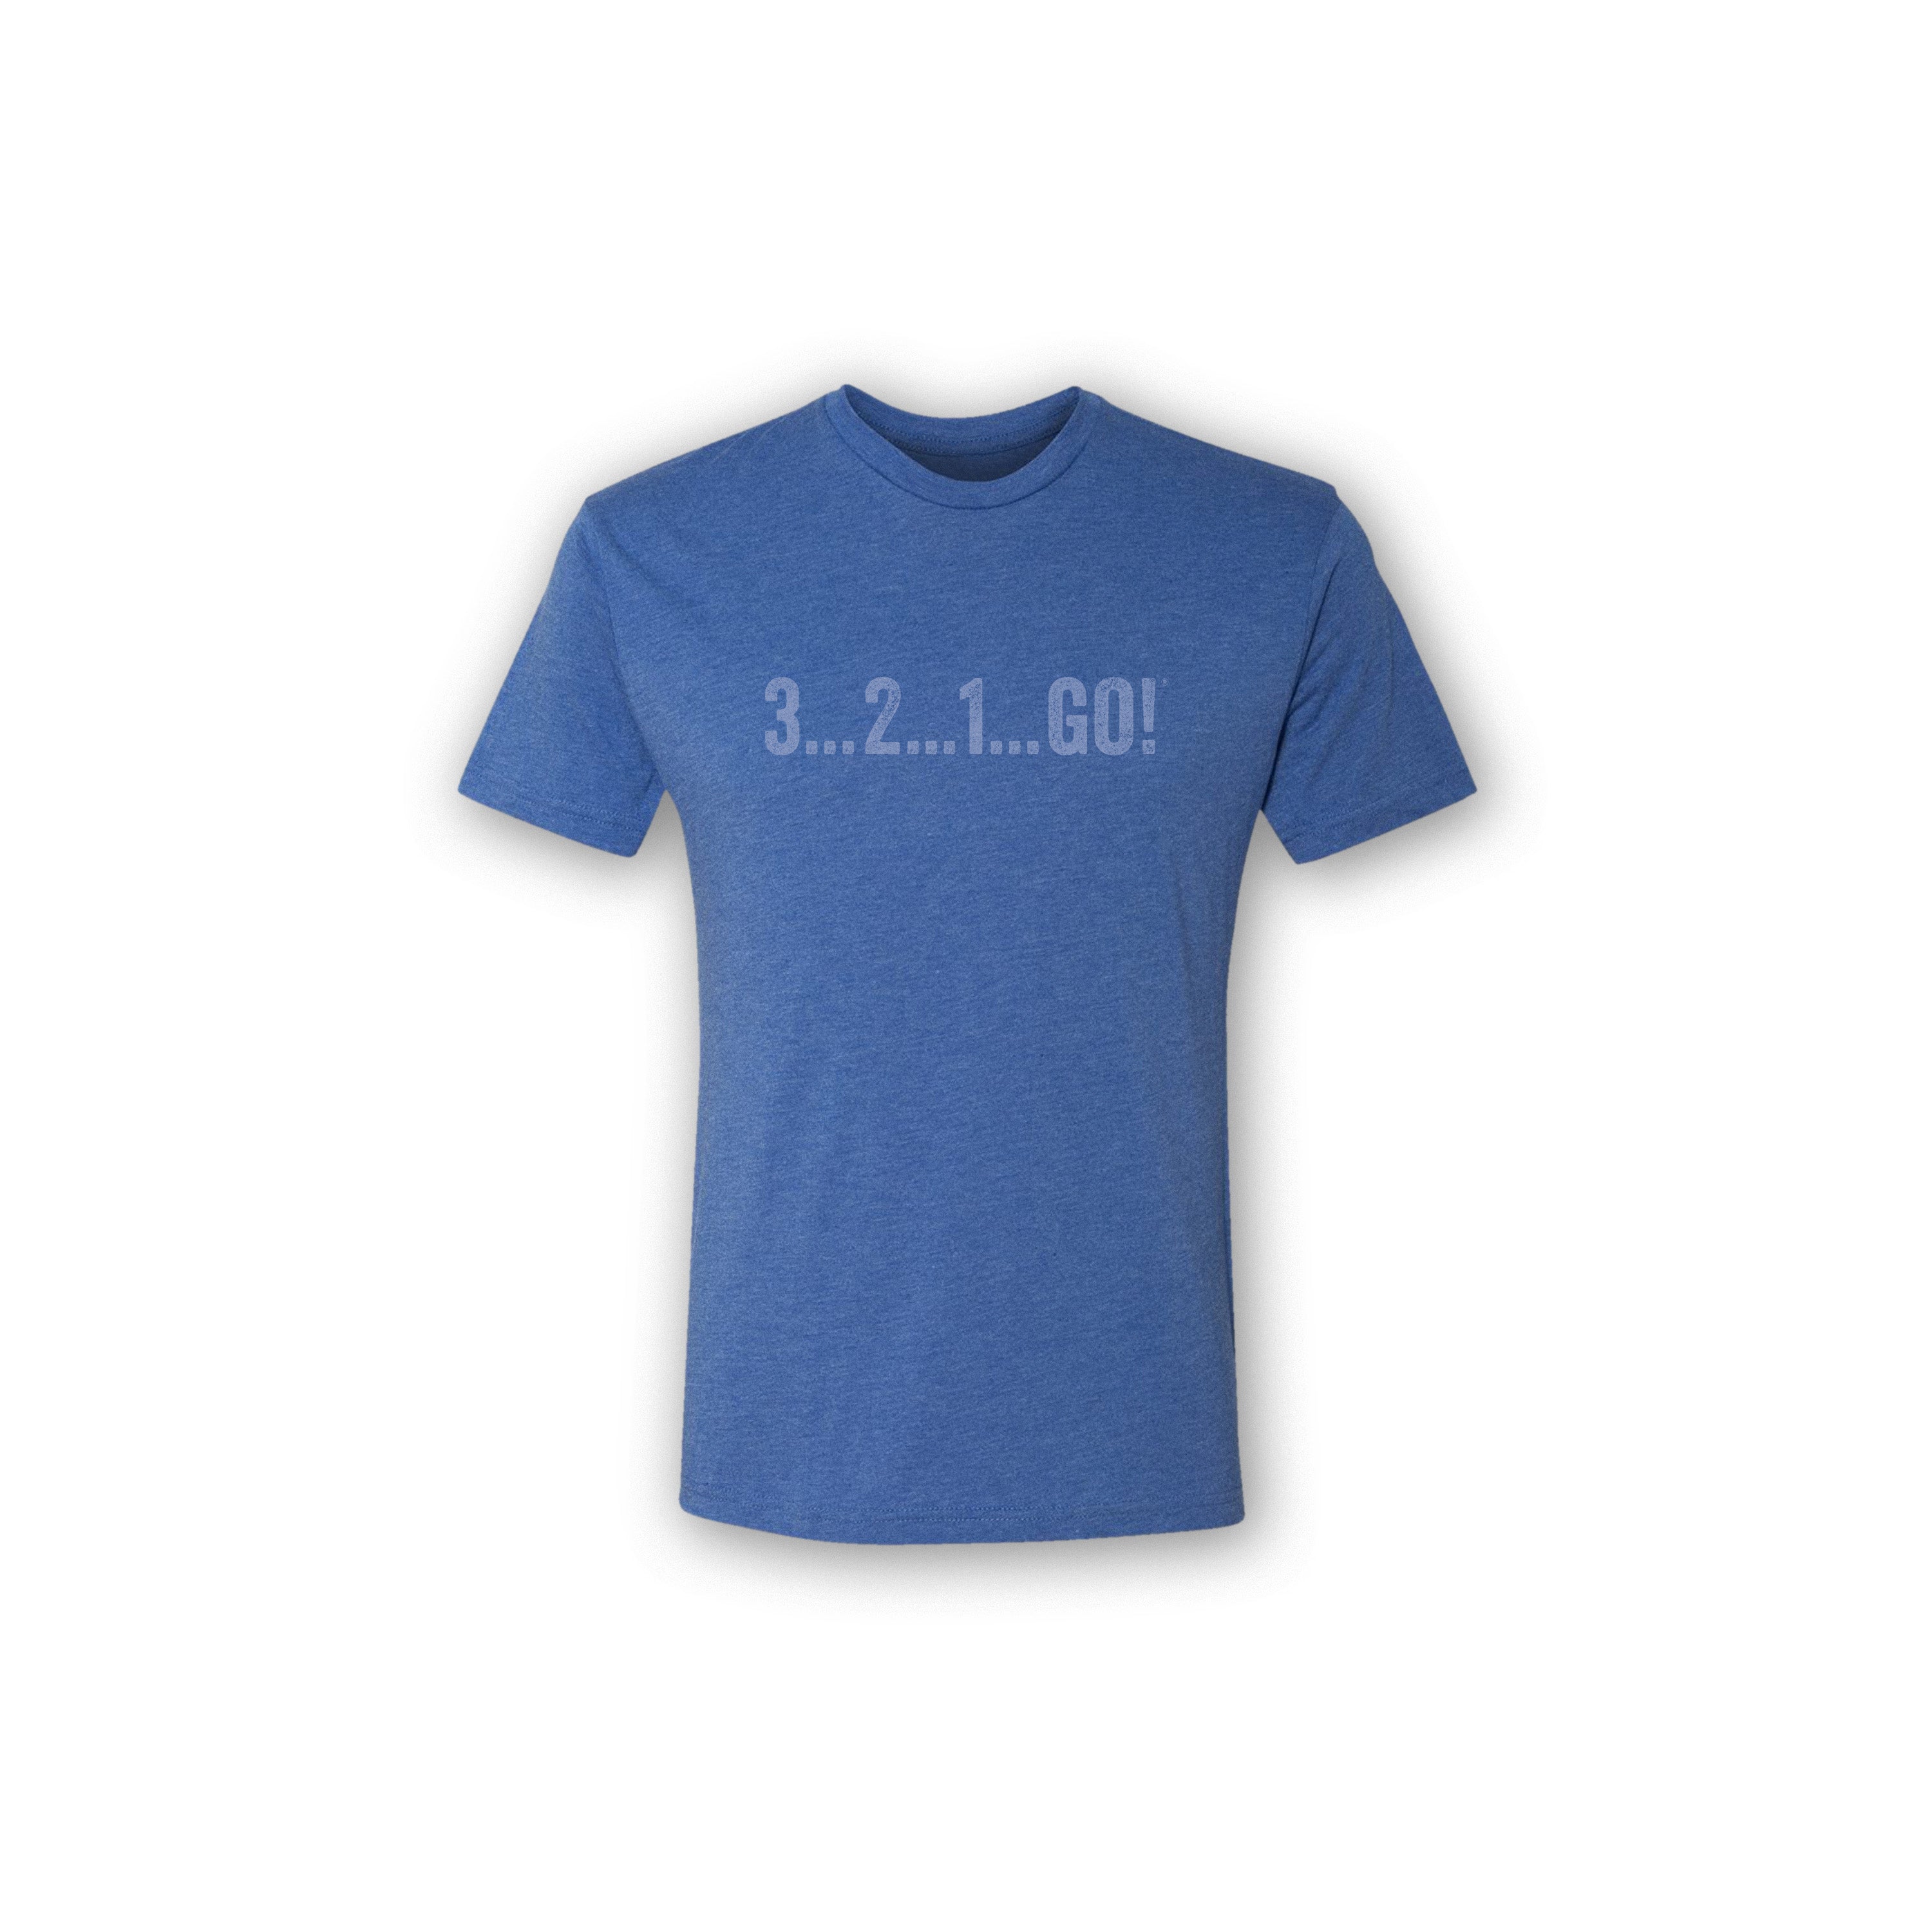 CrossFit 3...2...1...GO! T-Shirt - Vintage Royal Blue